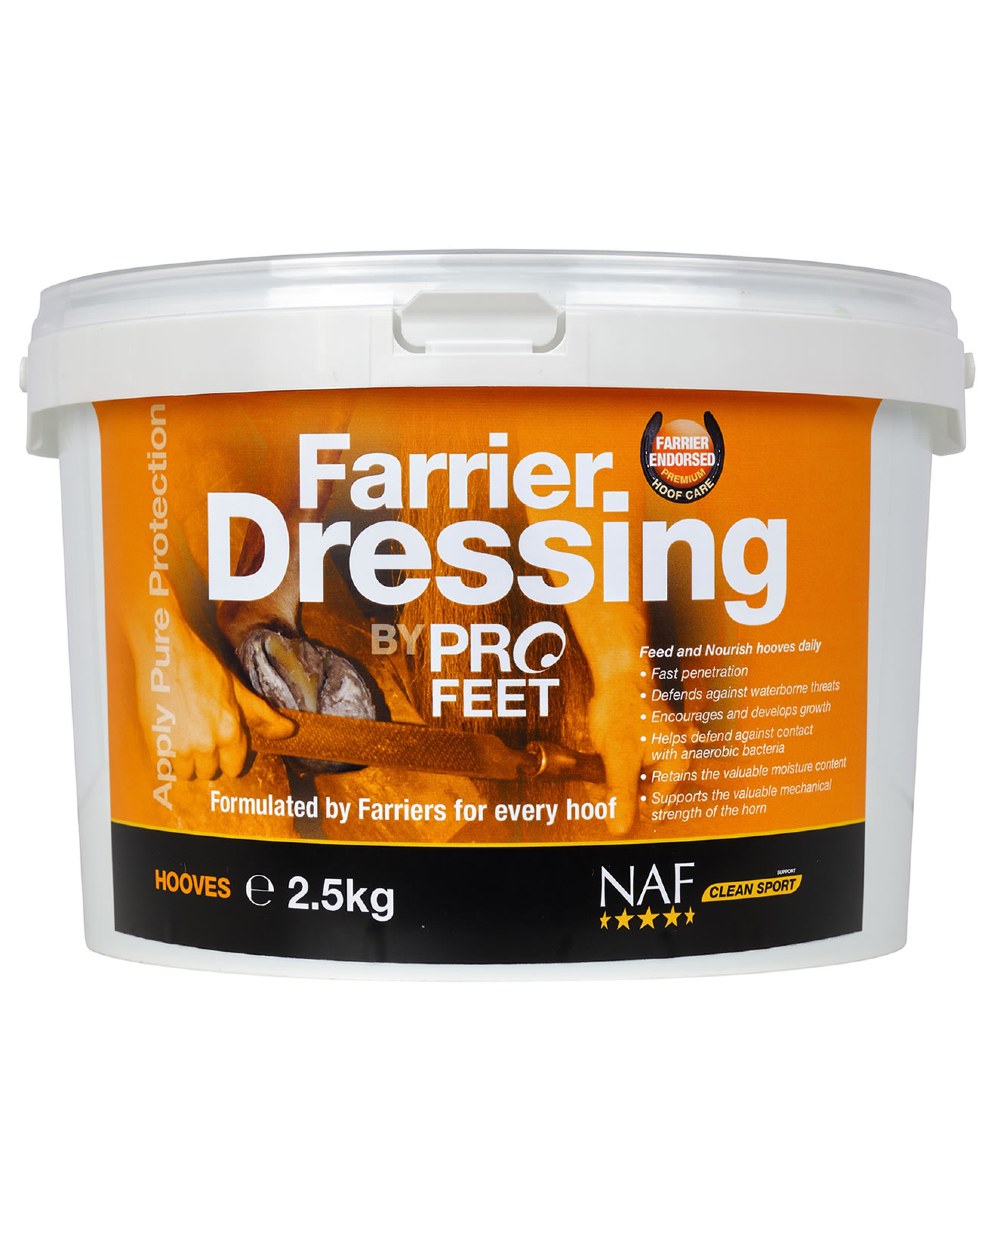 NAF Five Star Profeet Farrier Dressing 2.5 kg on white background